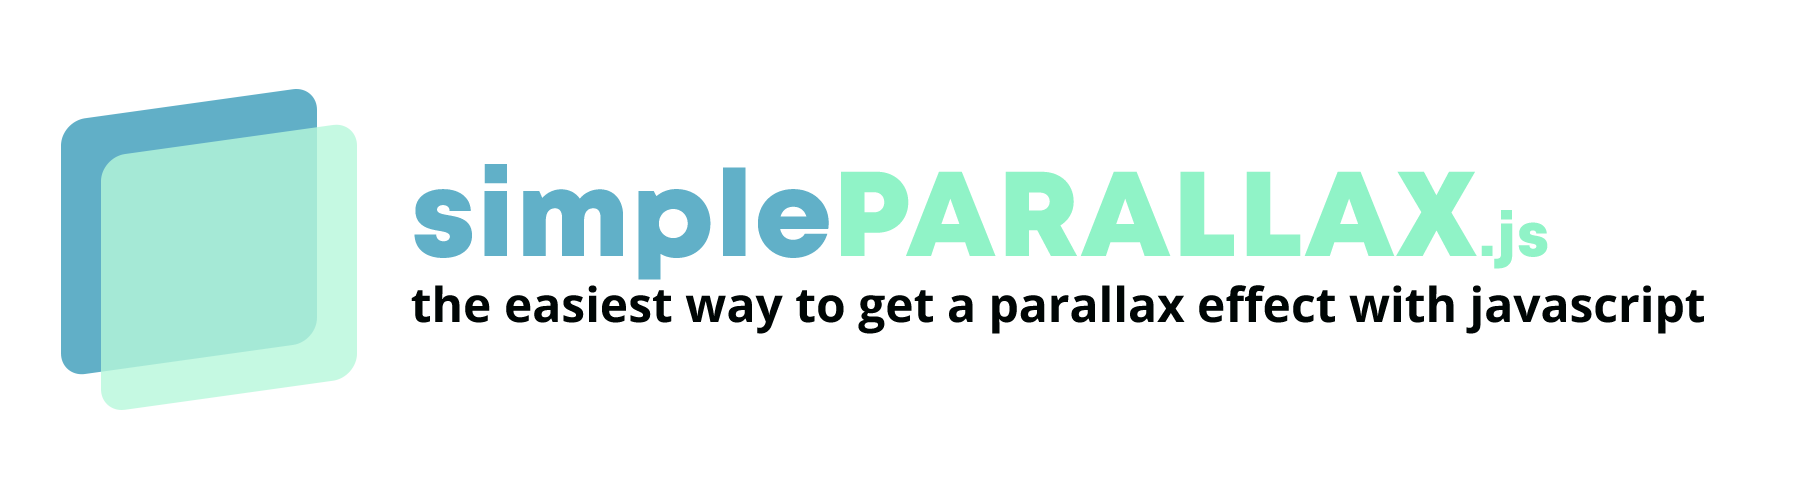 simpleParallax logo